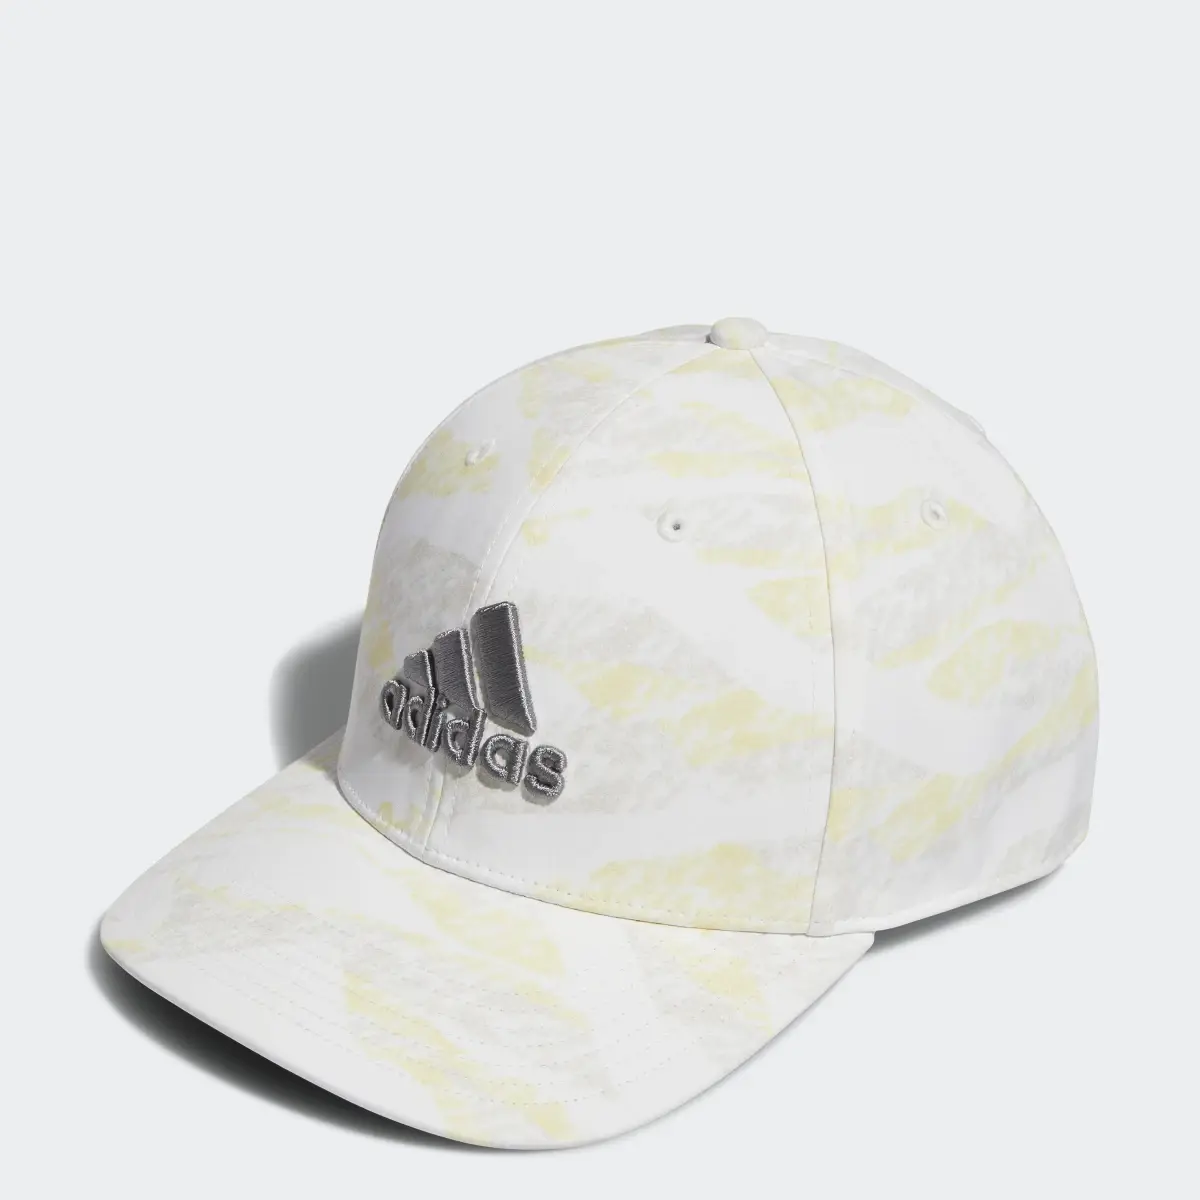 Adidas Tour Print Hat. 1